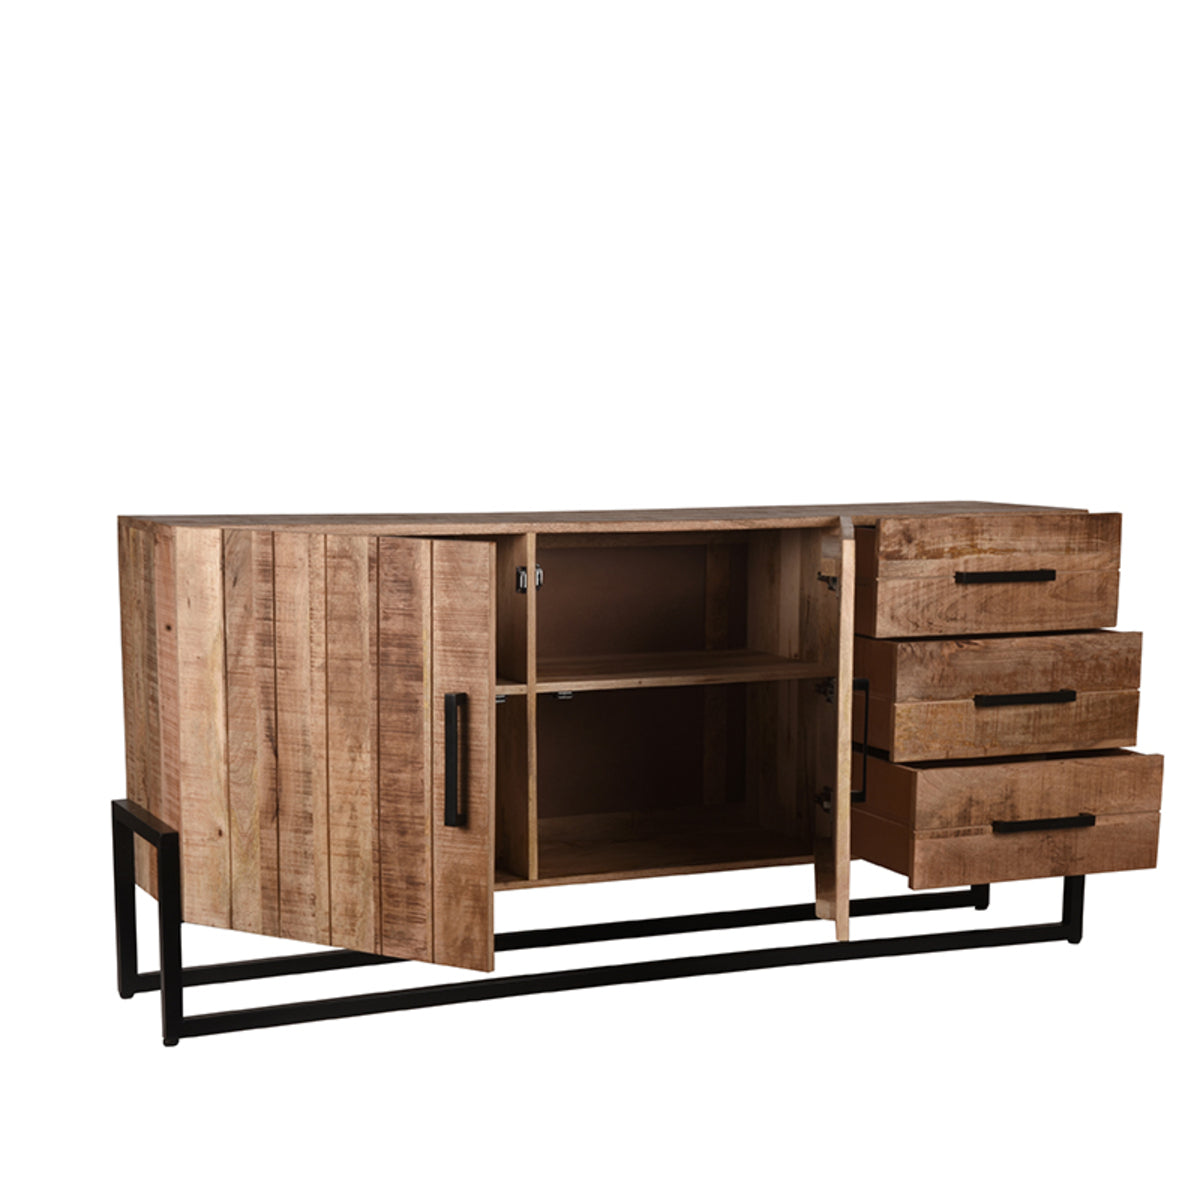 LABEL51 Dresser Bolivia - Rough - Mango wood